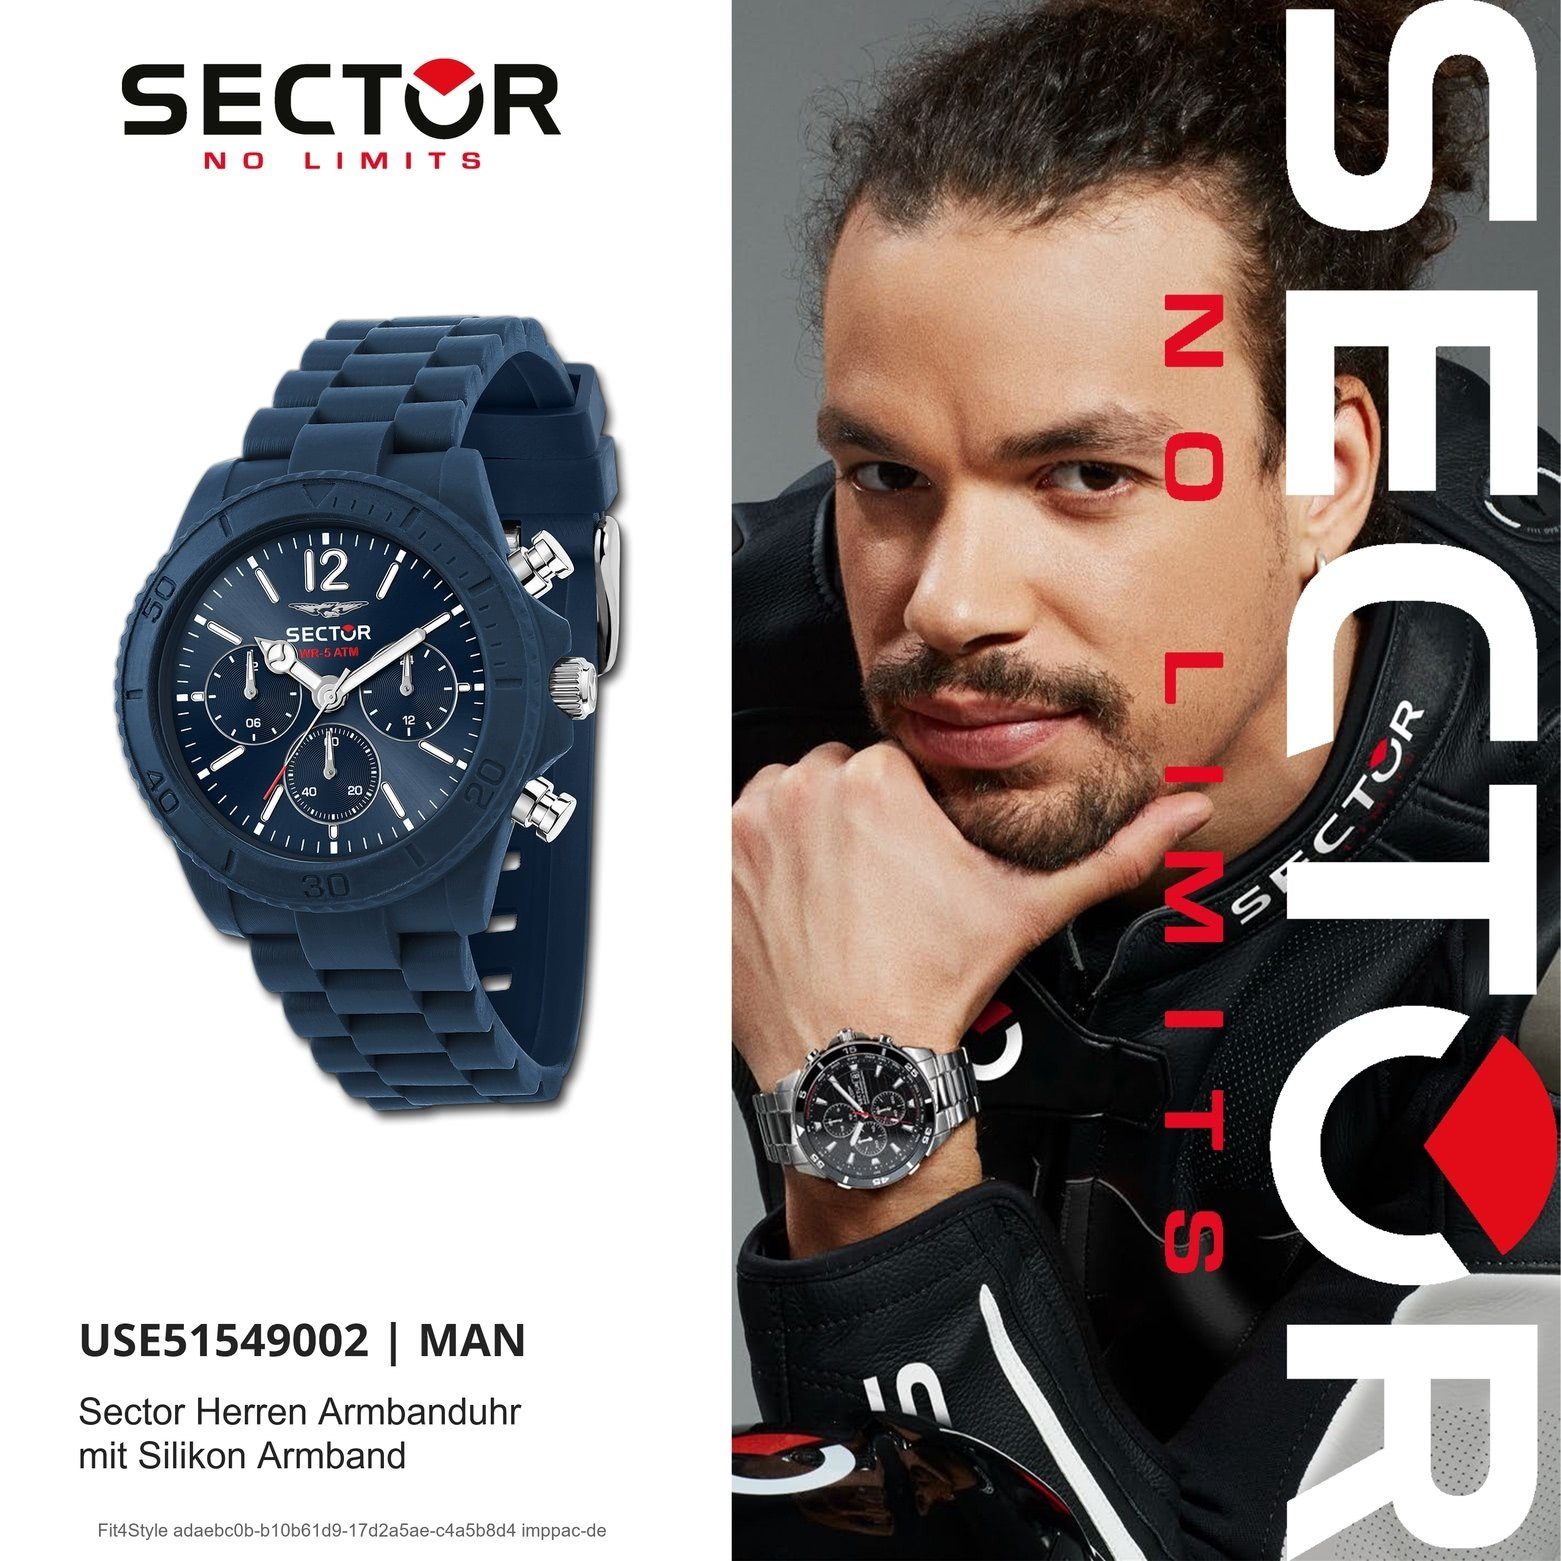 Sector Multifunktionsuhr Sector Herren Armbanduhr blau, Herren groß (ca. Armbanduhr Fashion Silikonarmband Multifunktion, 45mm), rund